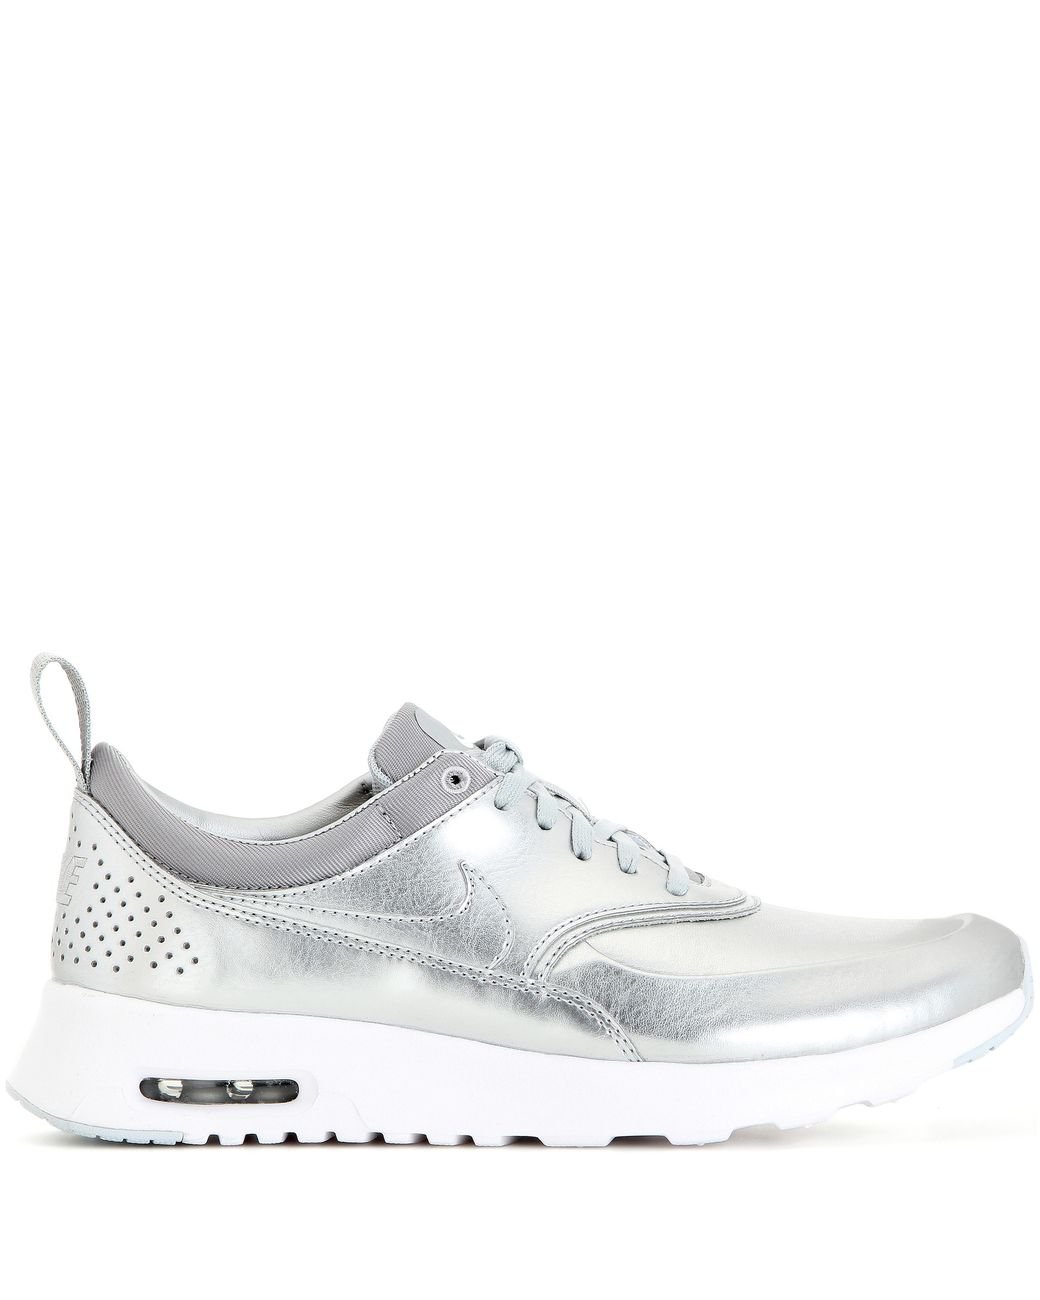 Nike Air Thea Metallic Silver Sneakers | Lyst